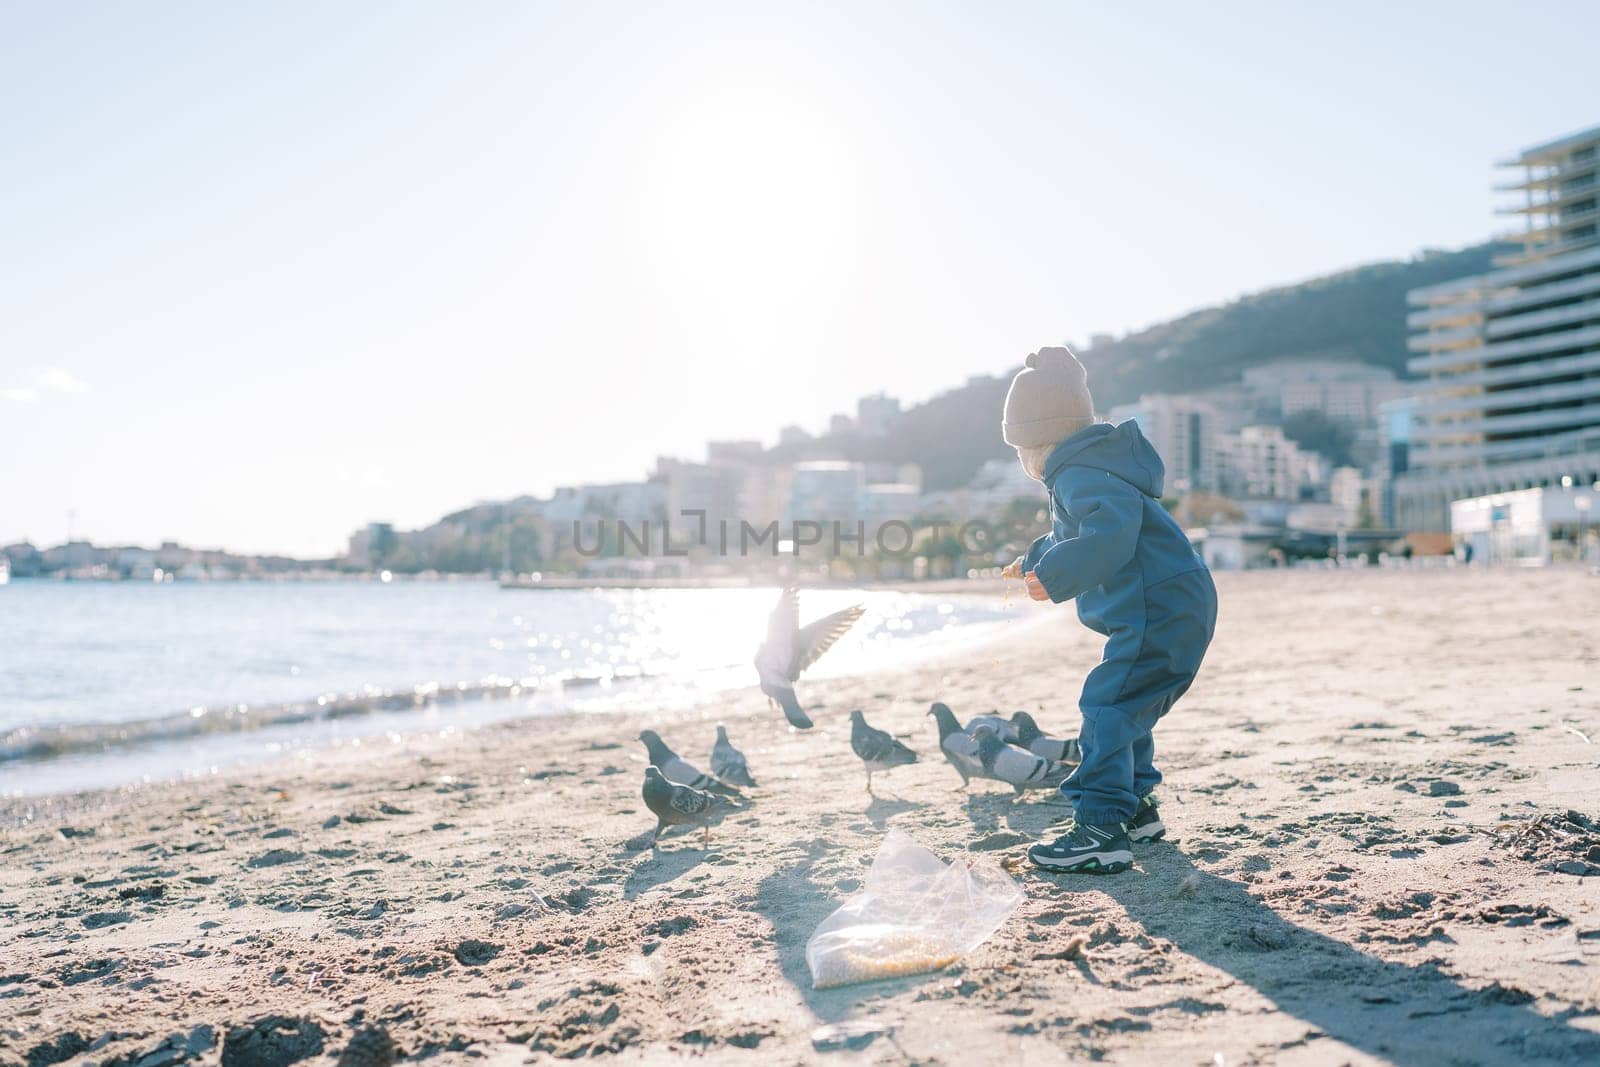 Little girl feeding pigeons on a sandy beach. High quality photo